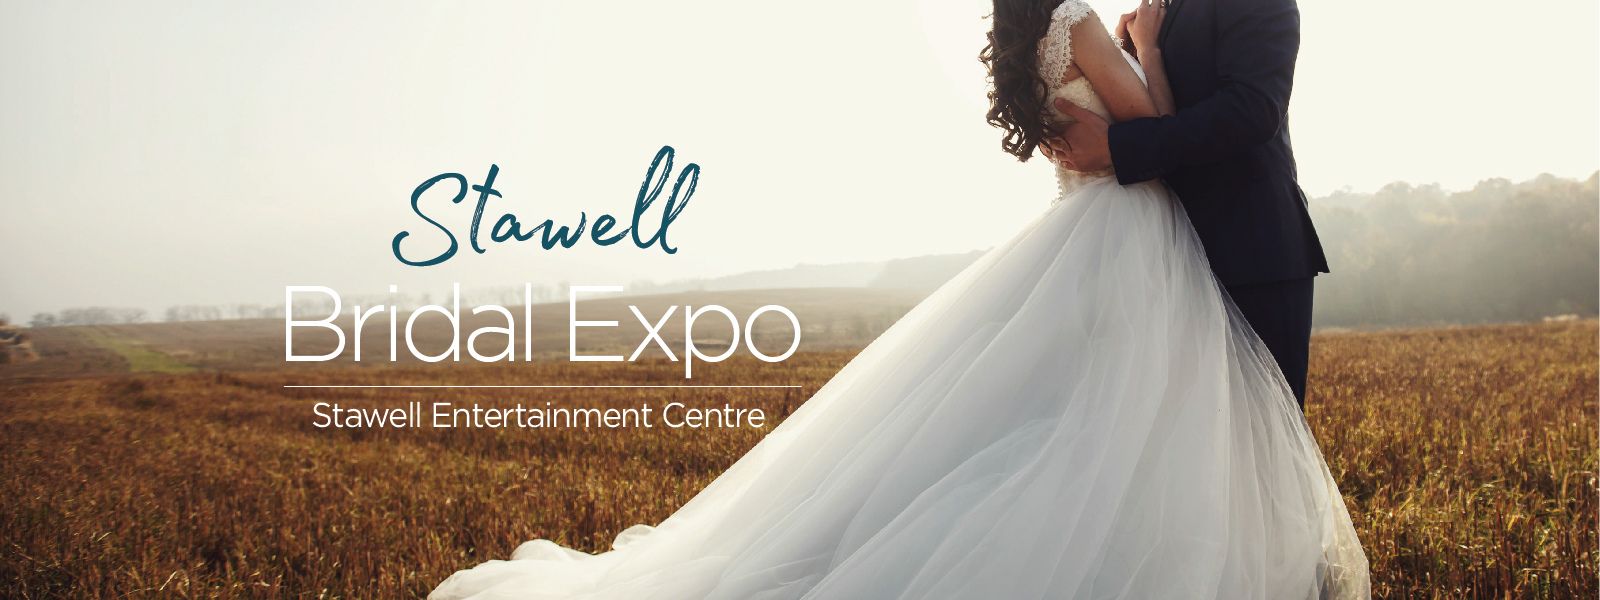 Stawell Bridal Expo - wedding expo